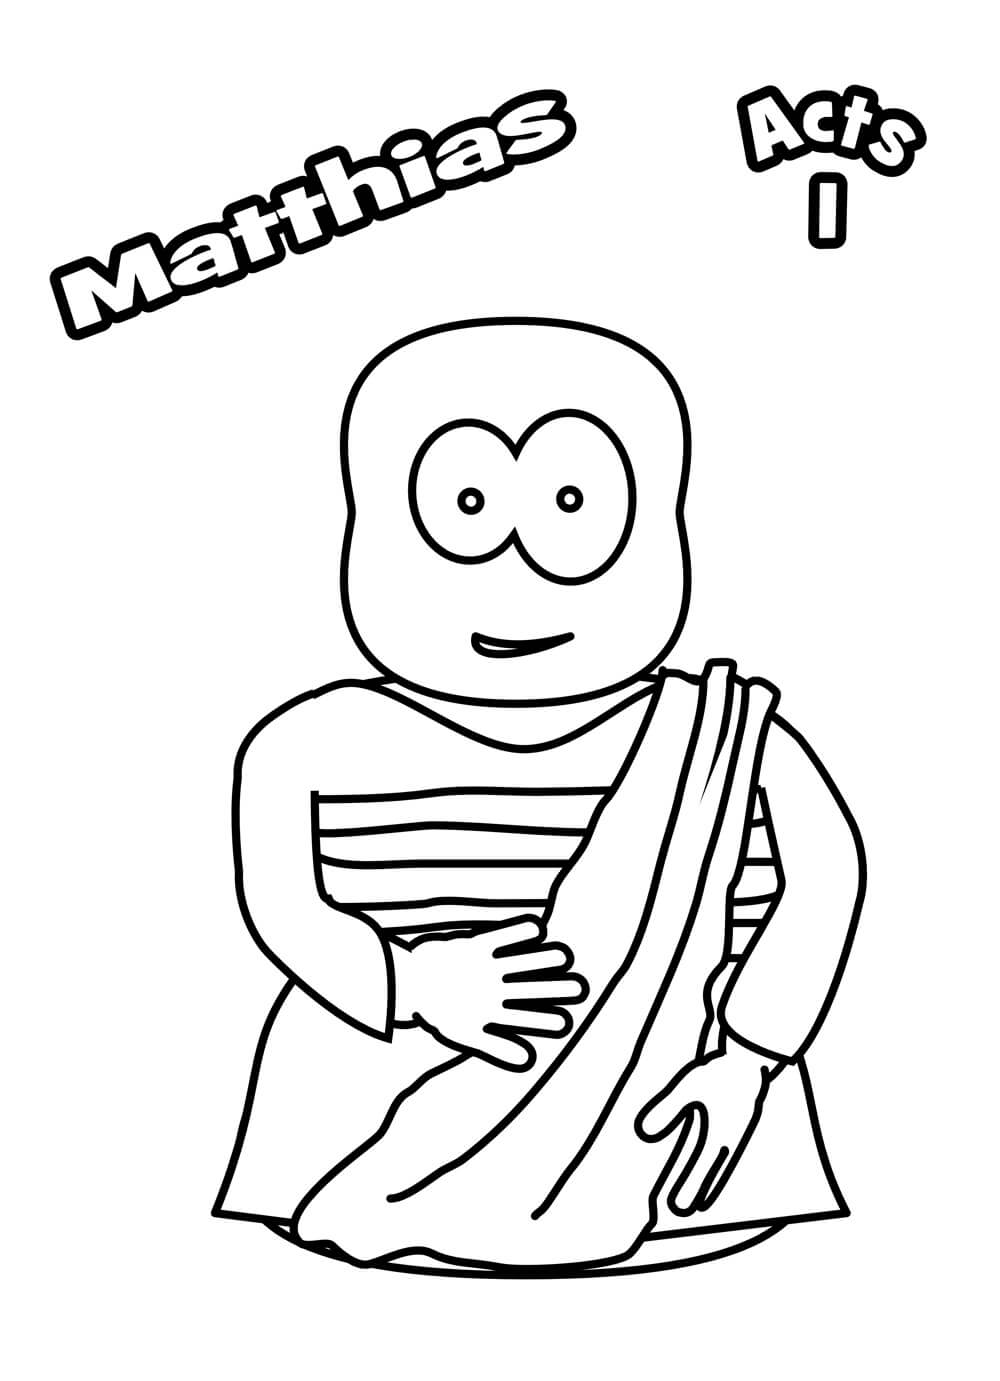 122-Matthias-blank-graphic